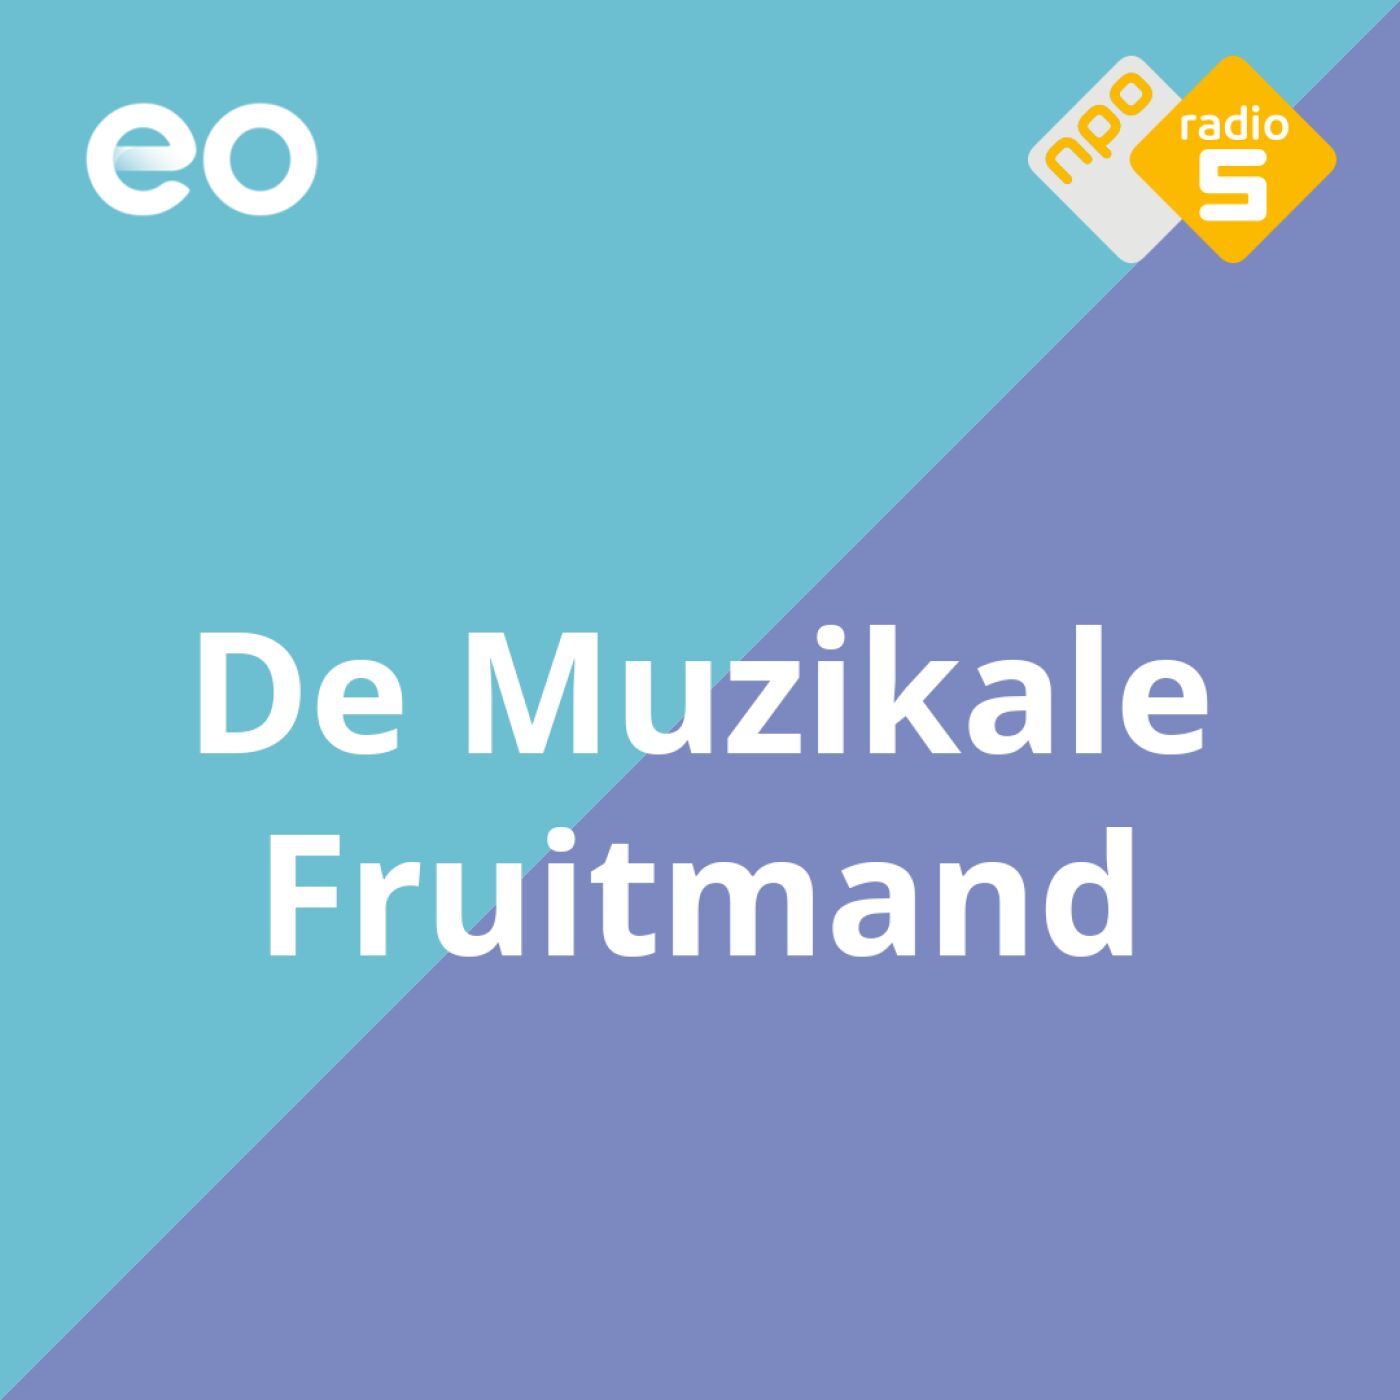 De Muzikale Fruitmand logo